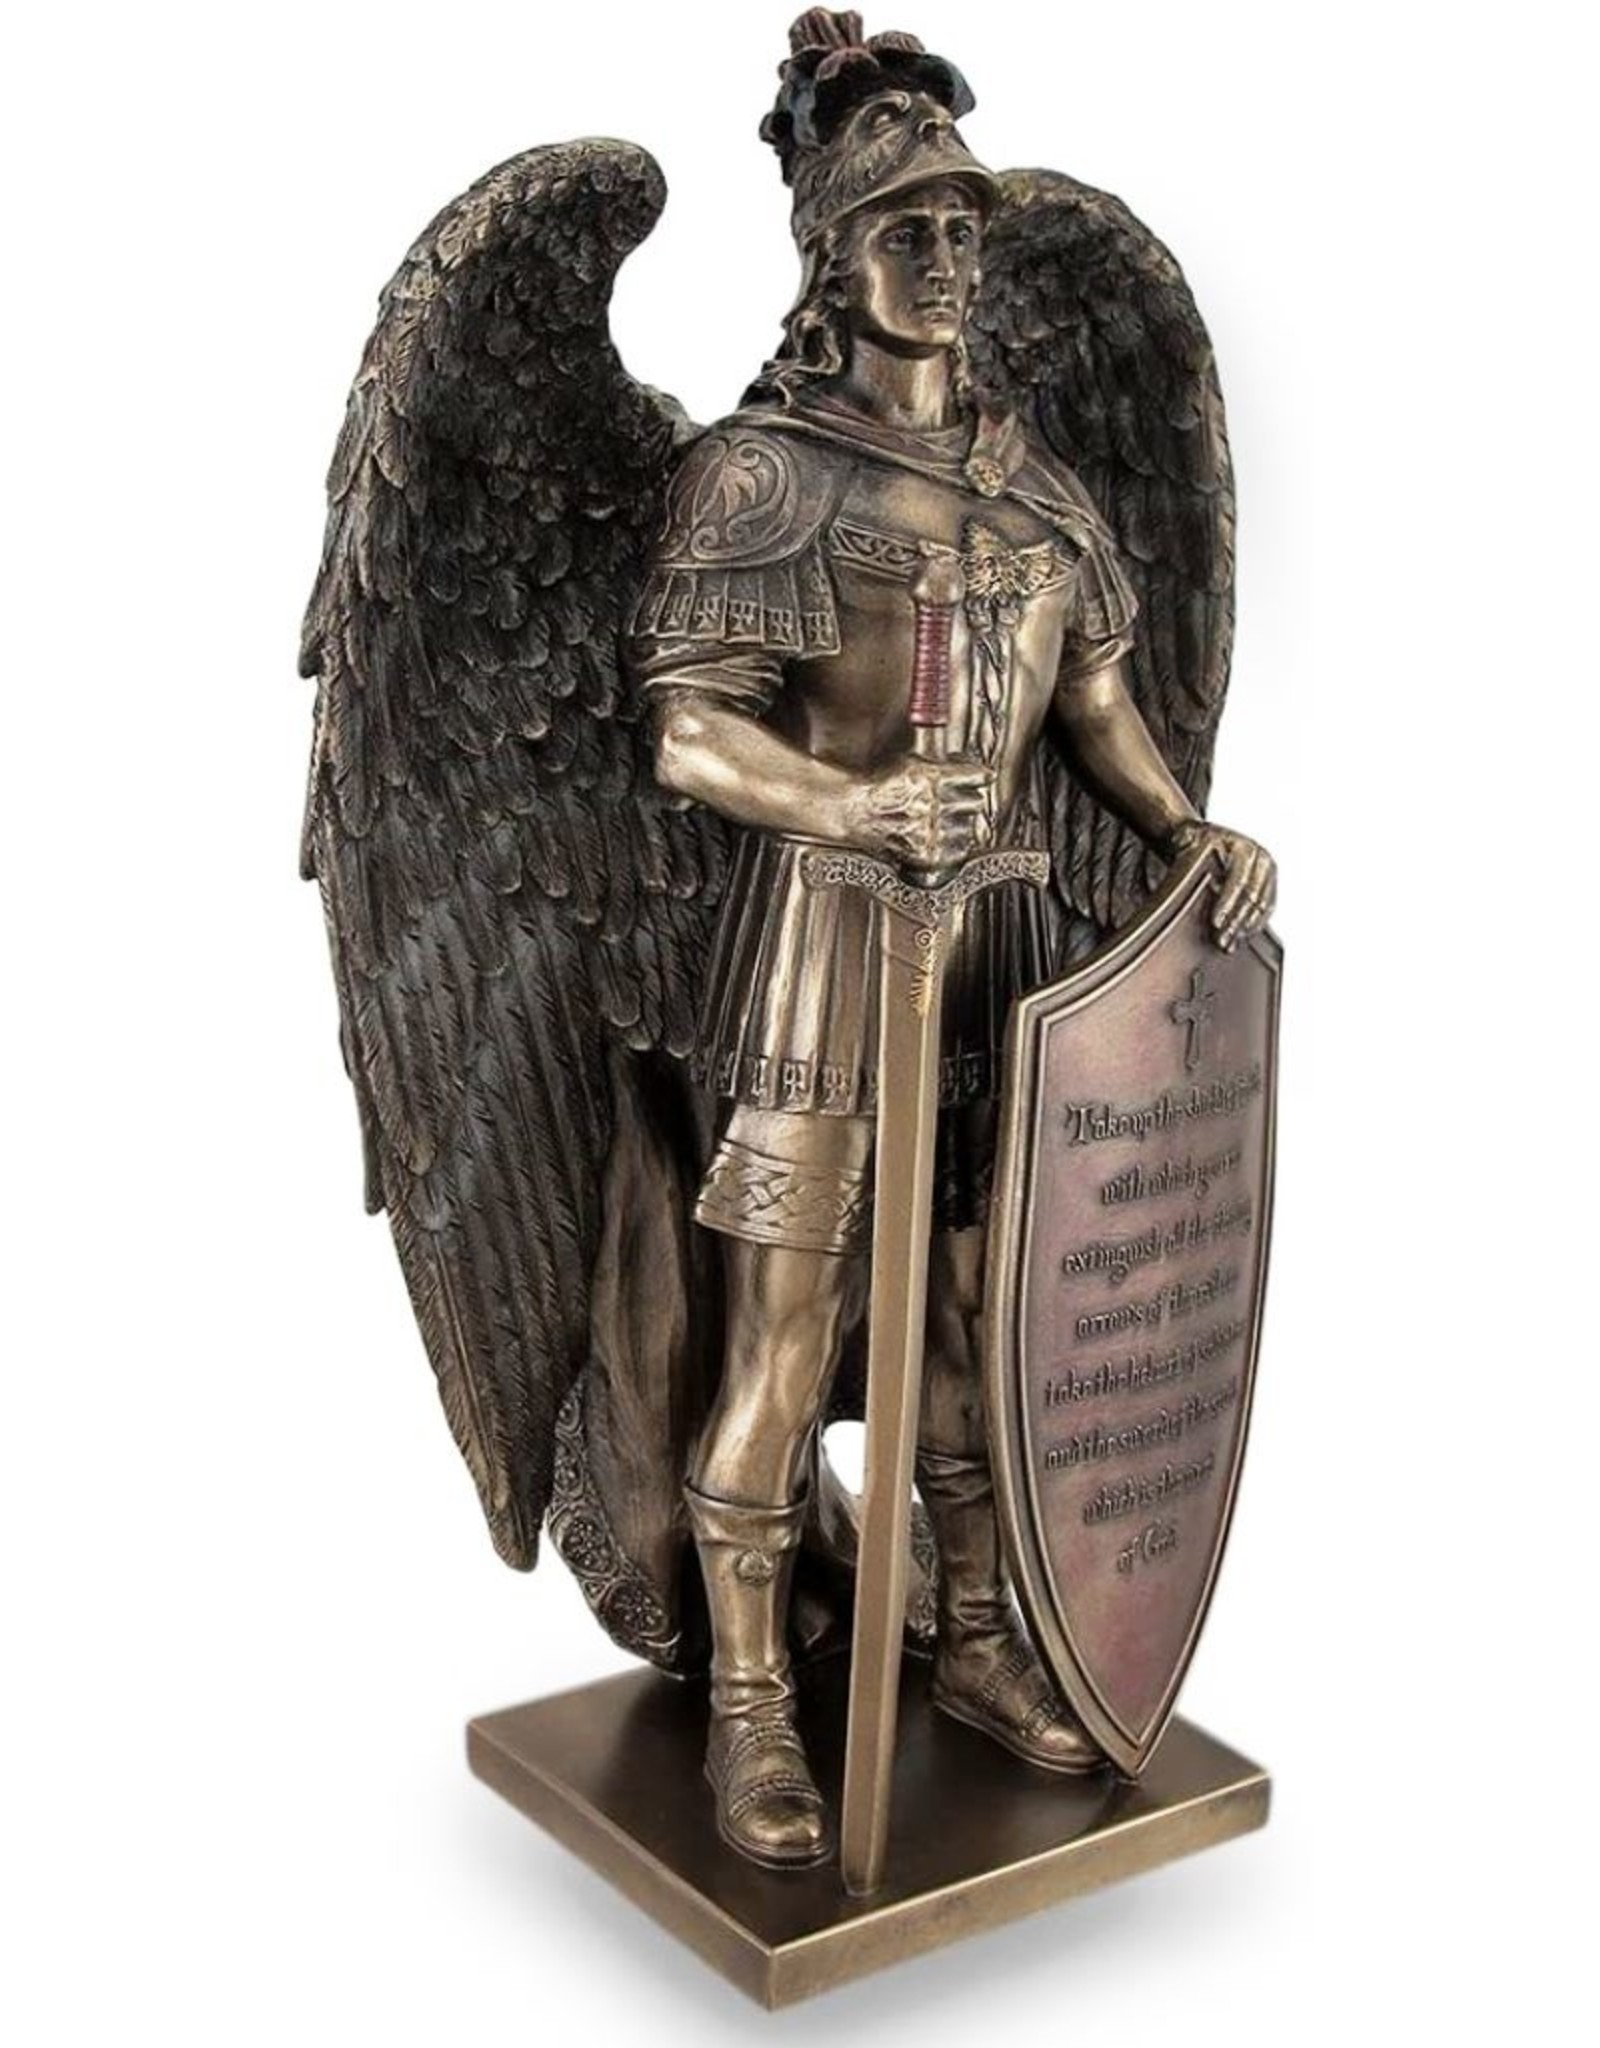 Veronese Design Giftware & Lifestyle - Archangel with Shield and Sword bronzed statue Veronese Design